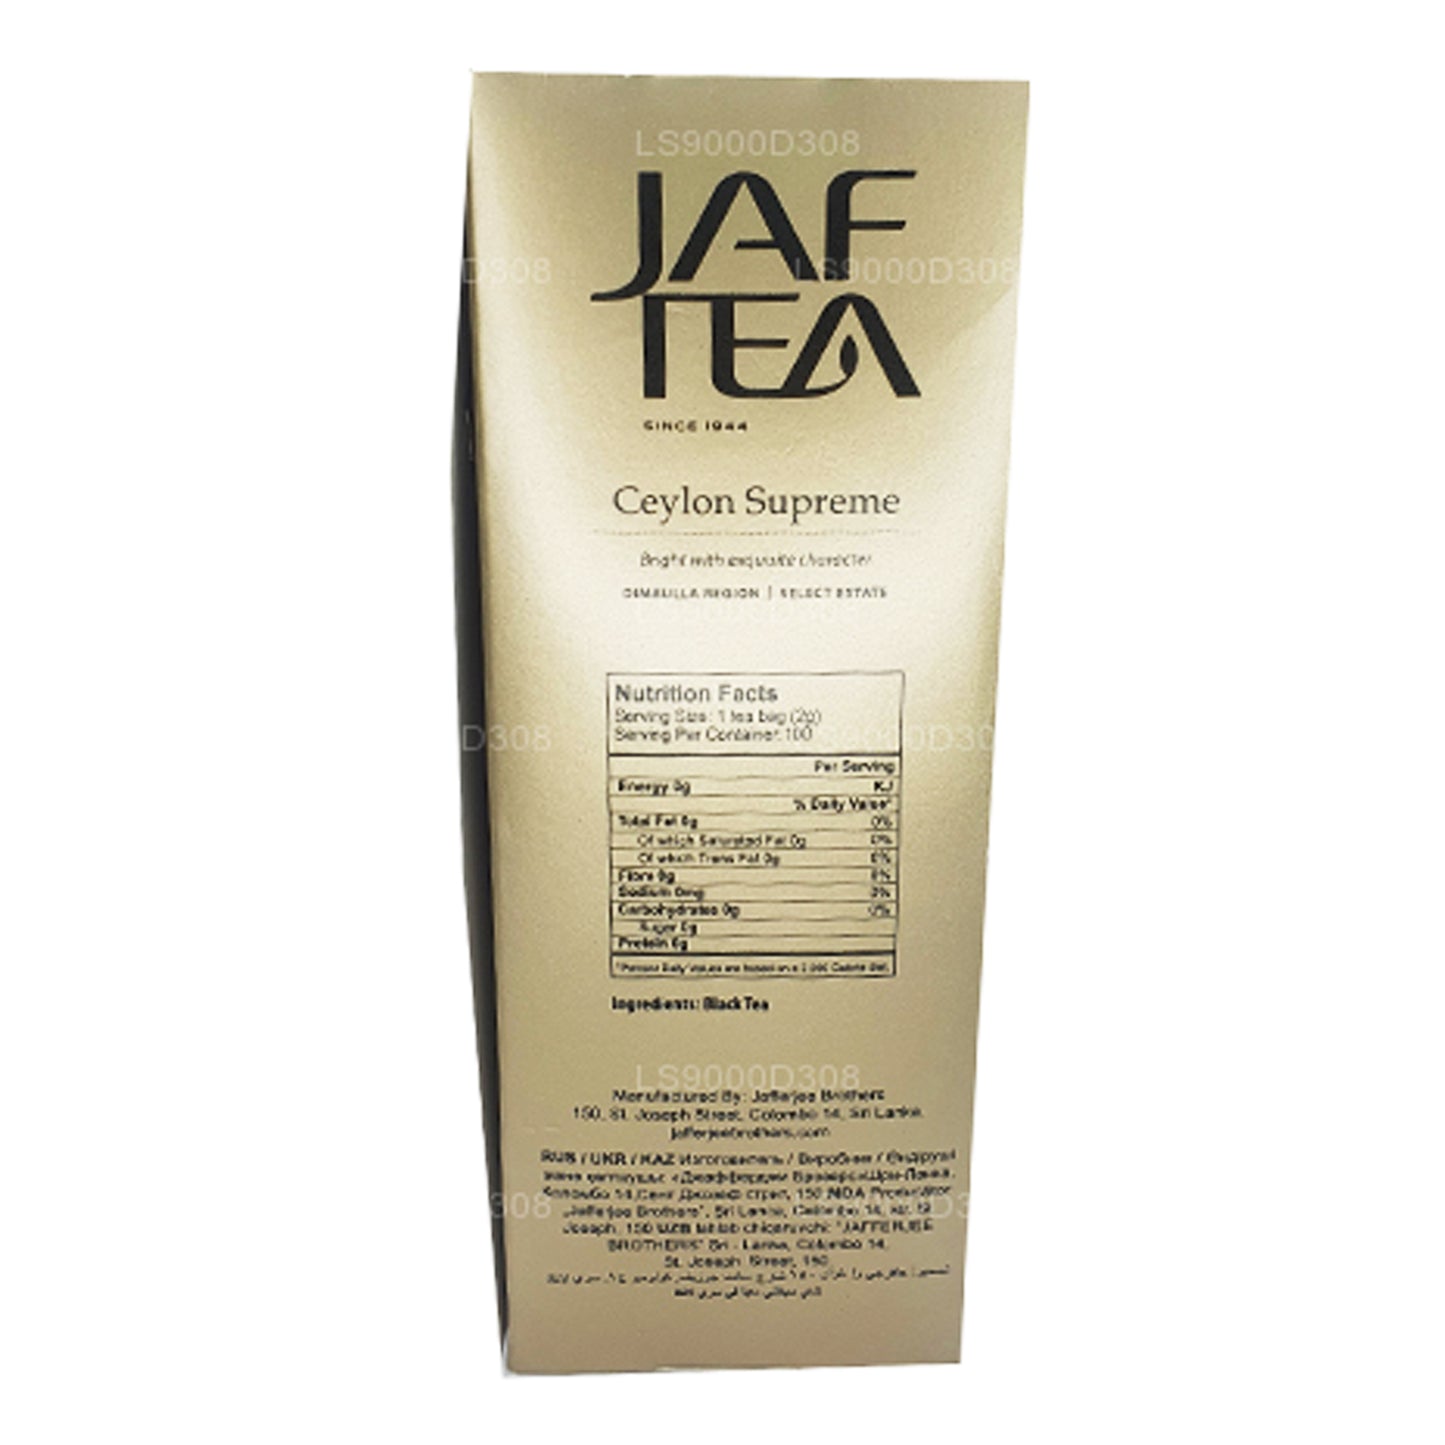 Jaf Tea クラシックゴールドコレクションセイロンスプリーム 100 ティーバッグストリング&タグ (200g)